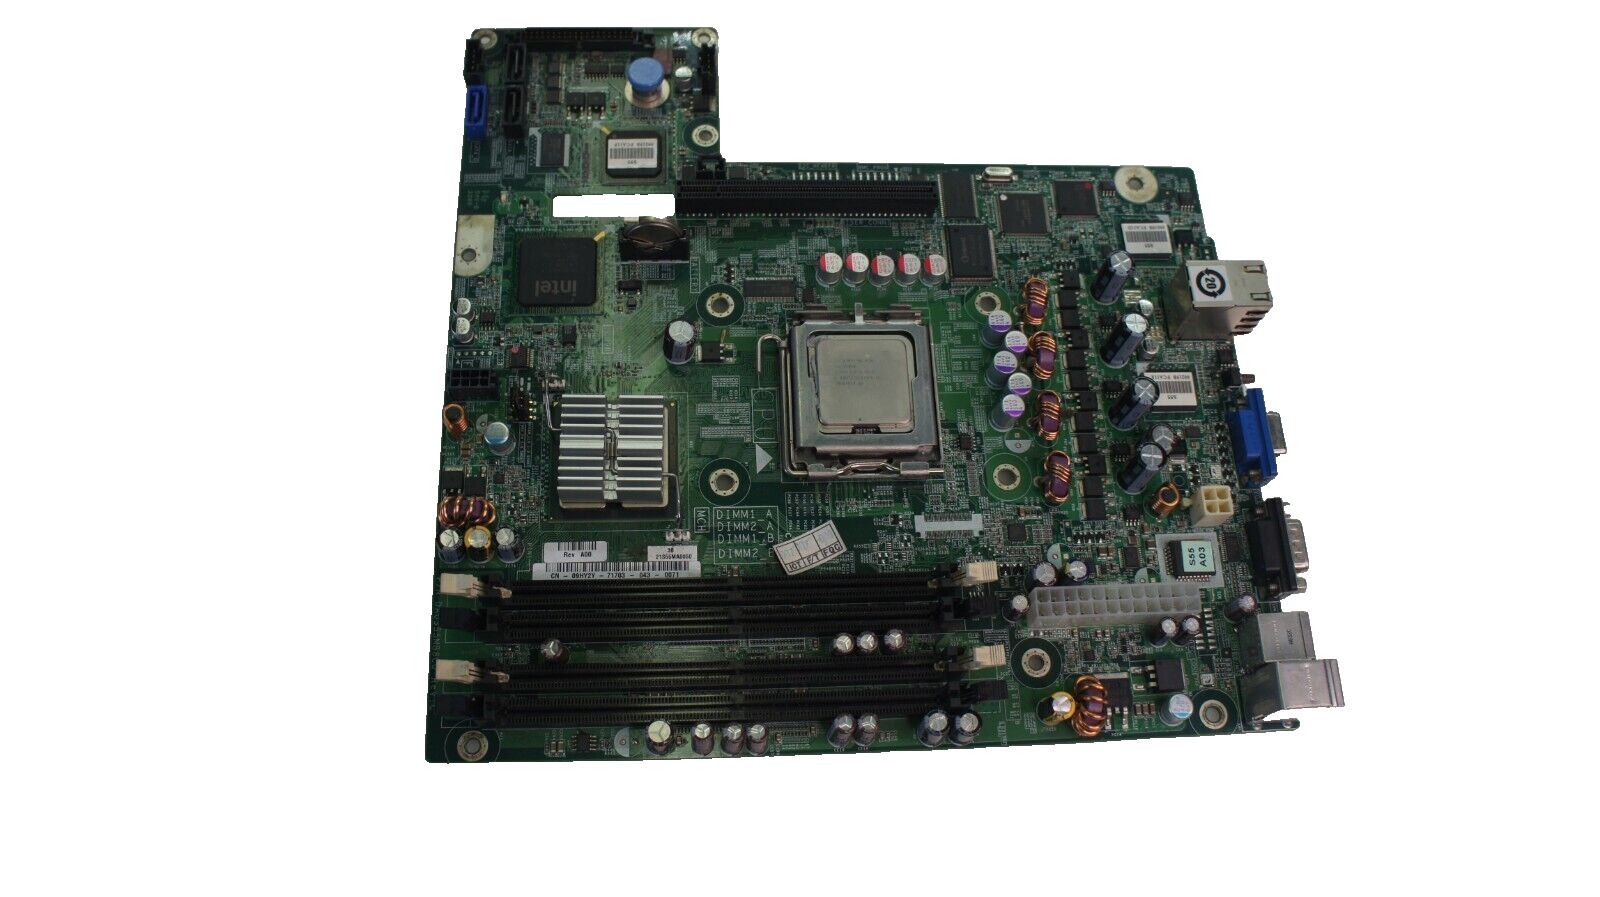 DELL POWEREDGE R200 INTEL CHIPSET 3200 SOCKET LGA775 SERVER MOTHERBOARD W/CPU